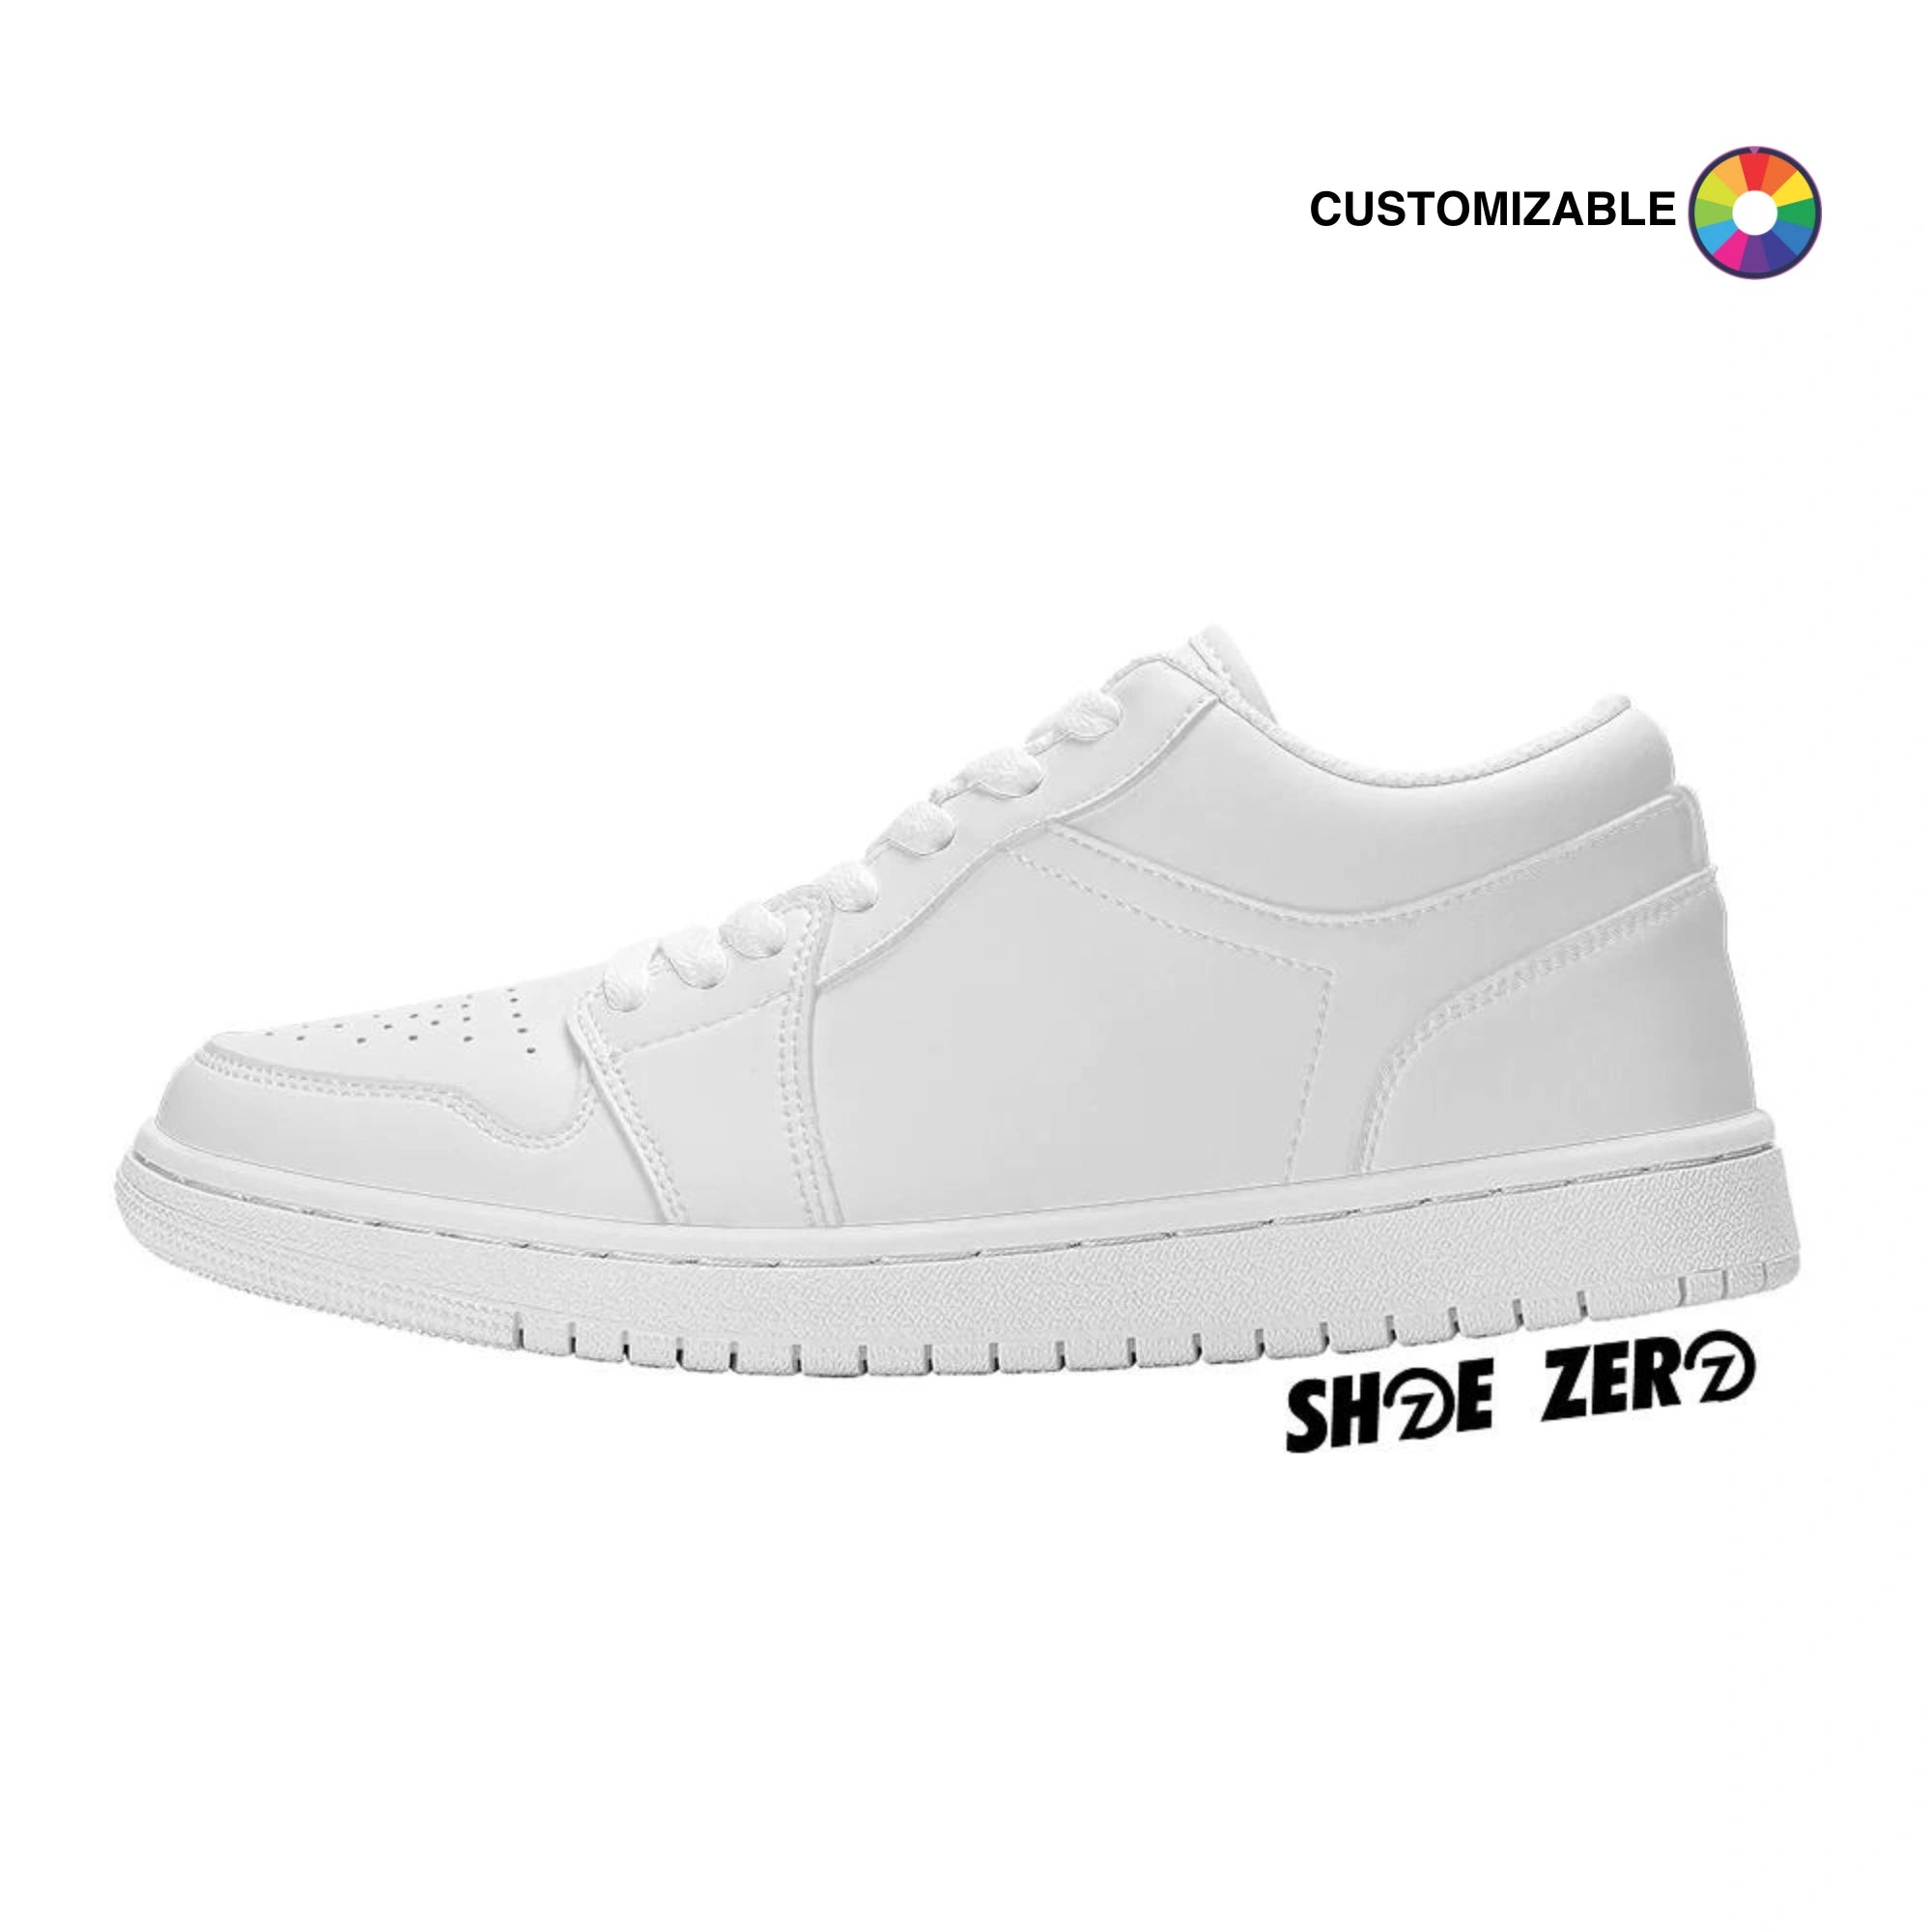 Customizable Vegan Leather Skateboard Sneakers (White) | Design your own Low Top | Shoe Zero